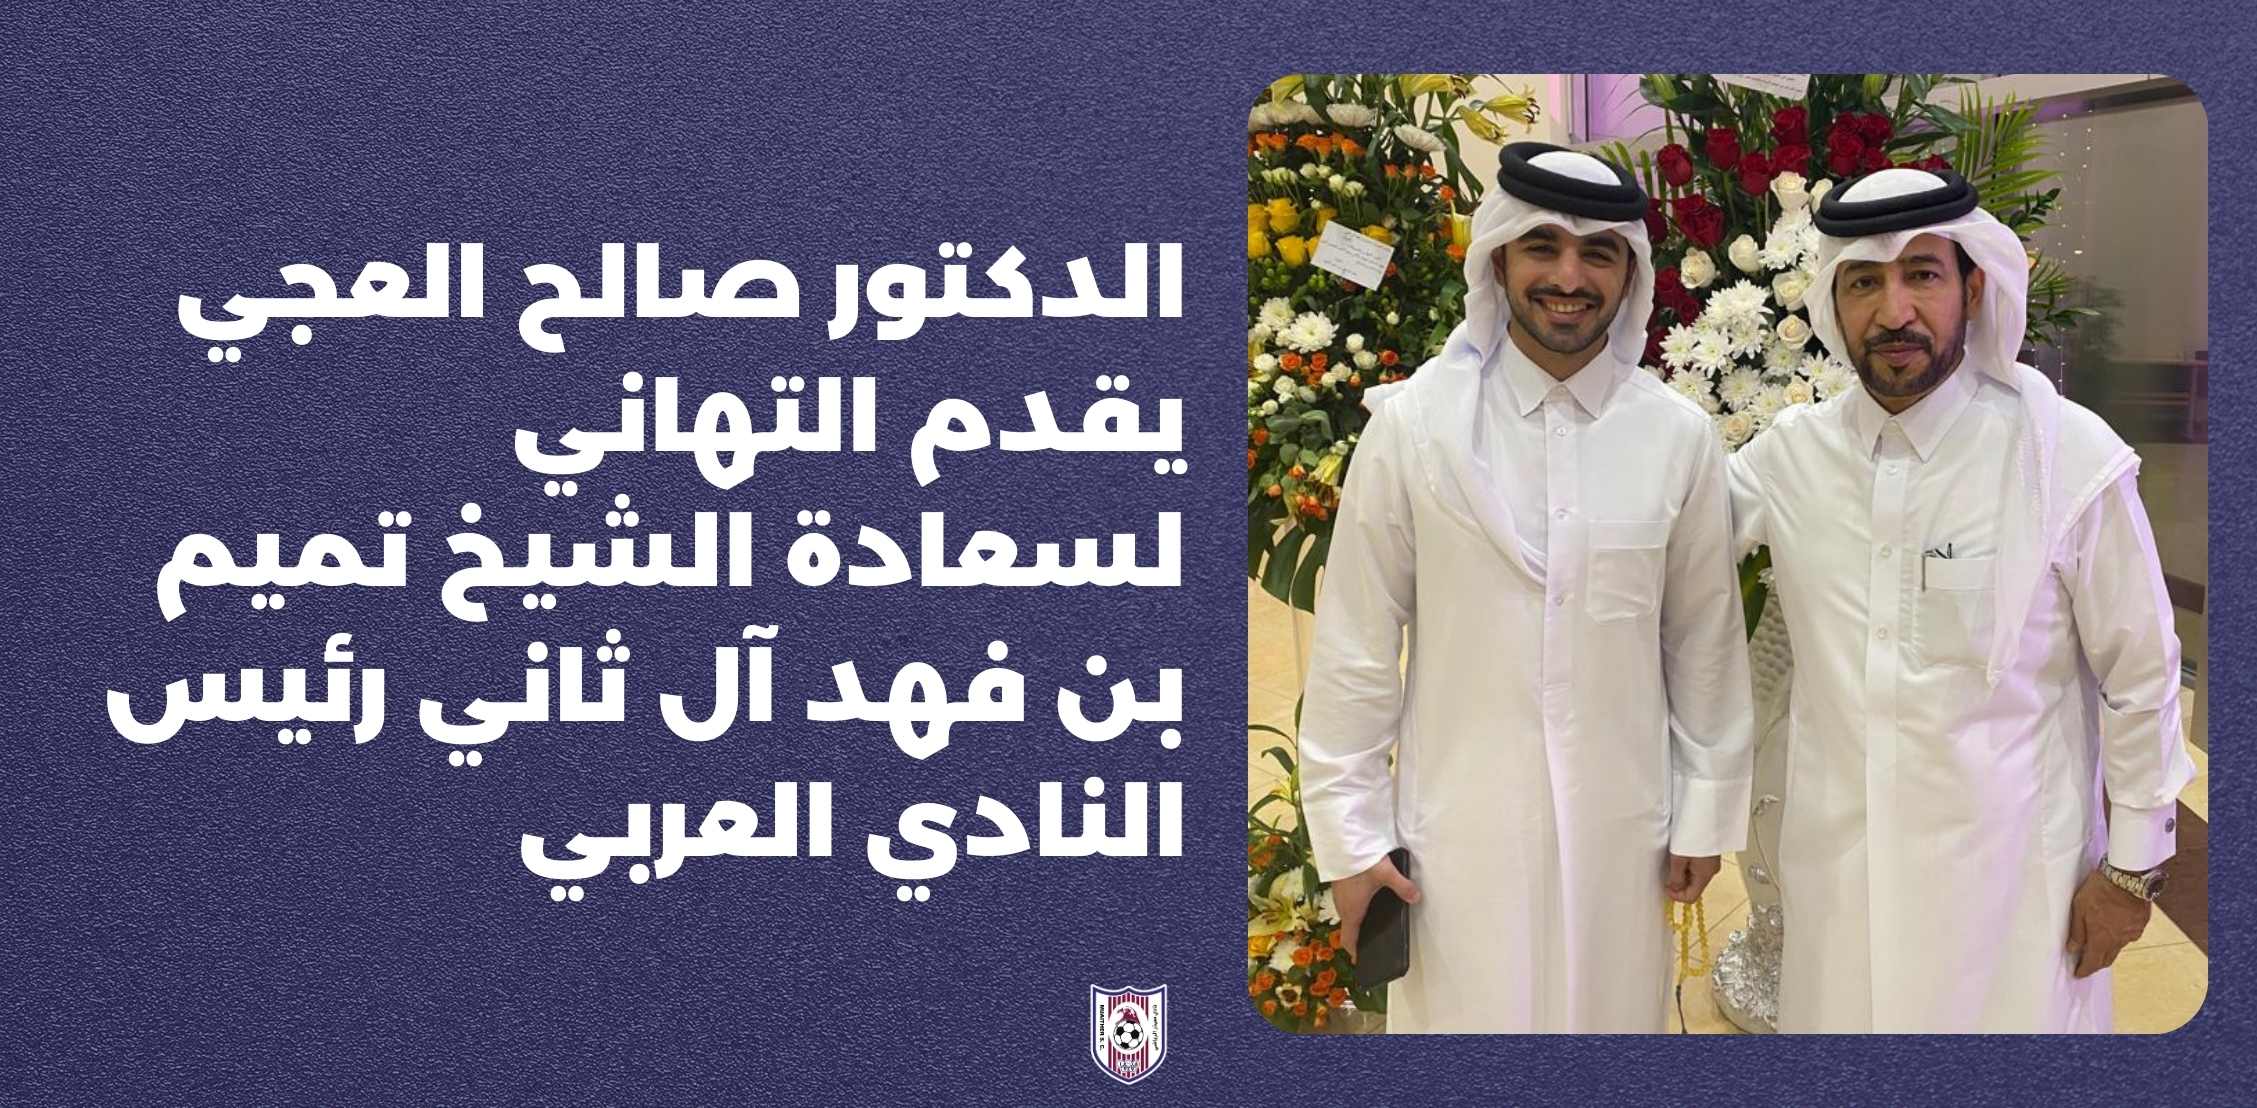 Dr. Saleh Al-Ajji presents his congratulations to His Excellency Sheikh Tamim bin Fahd Al-Thani, President of Al-Arabi Club